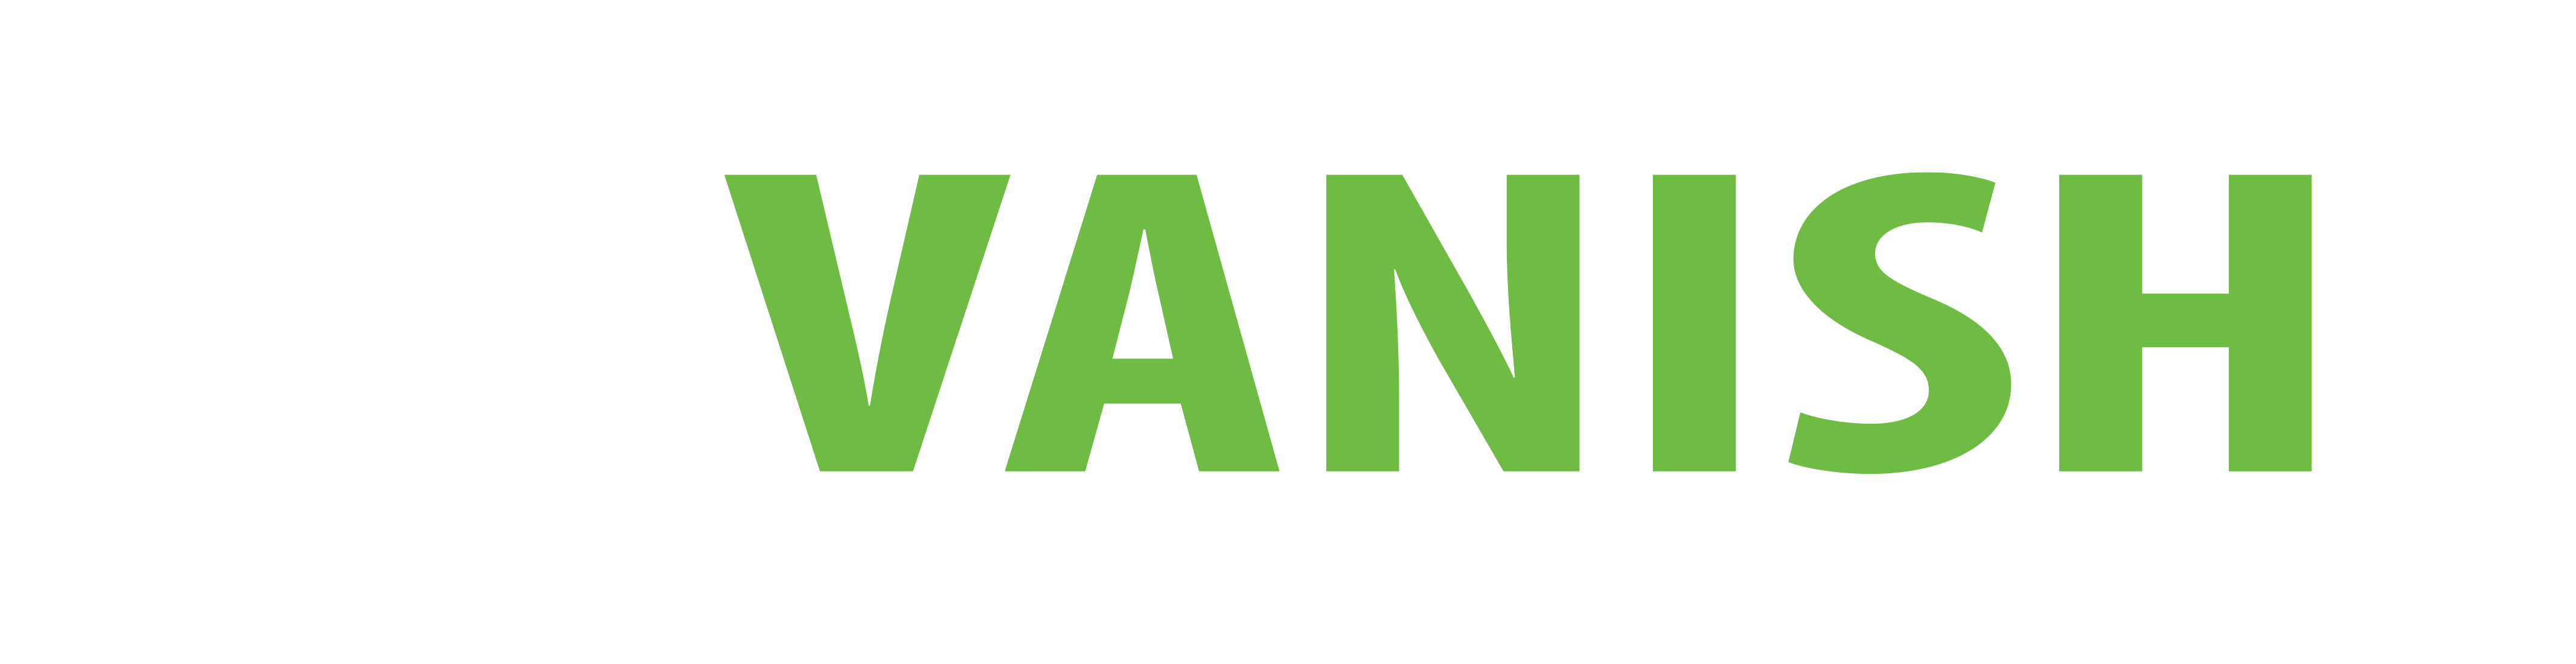 ipvanish-text-logo-white